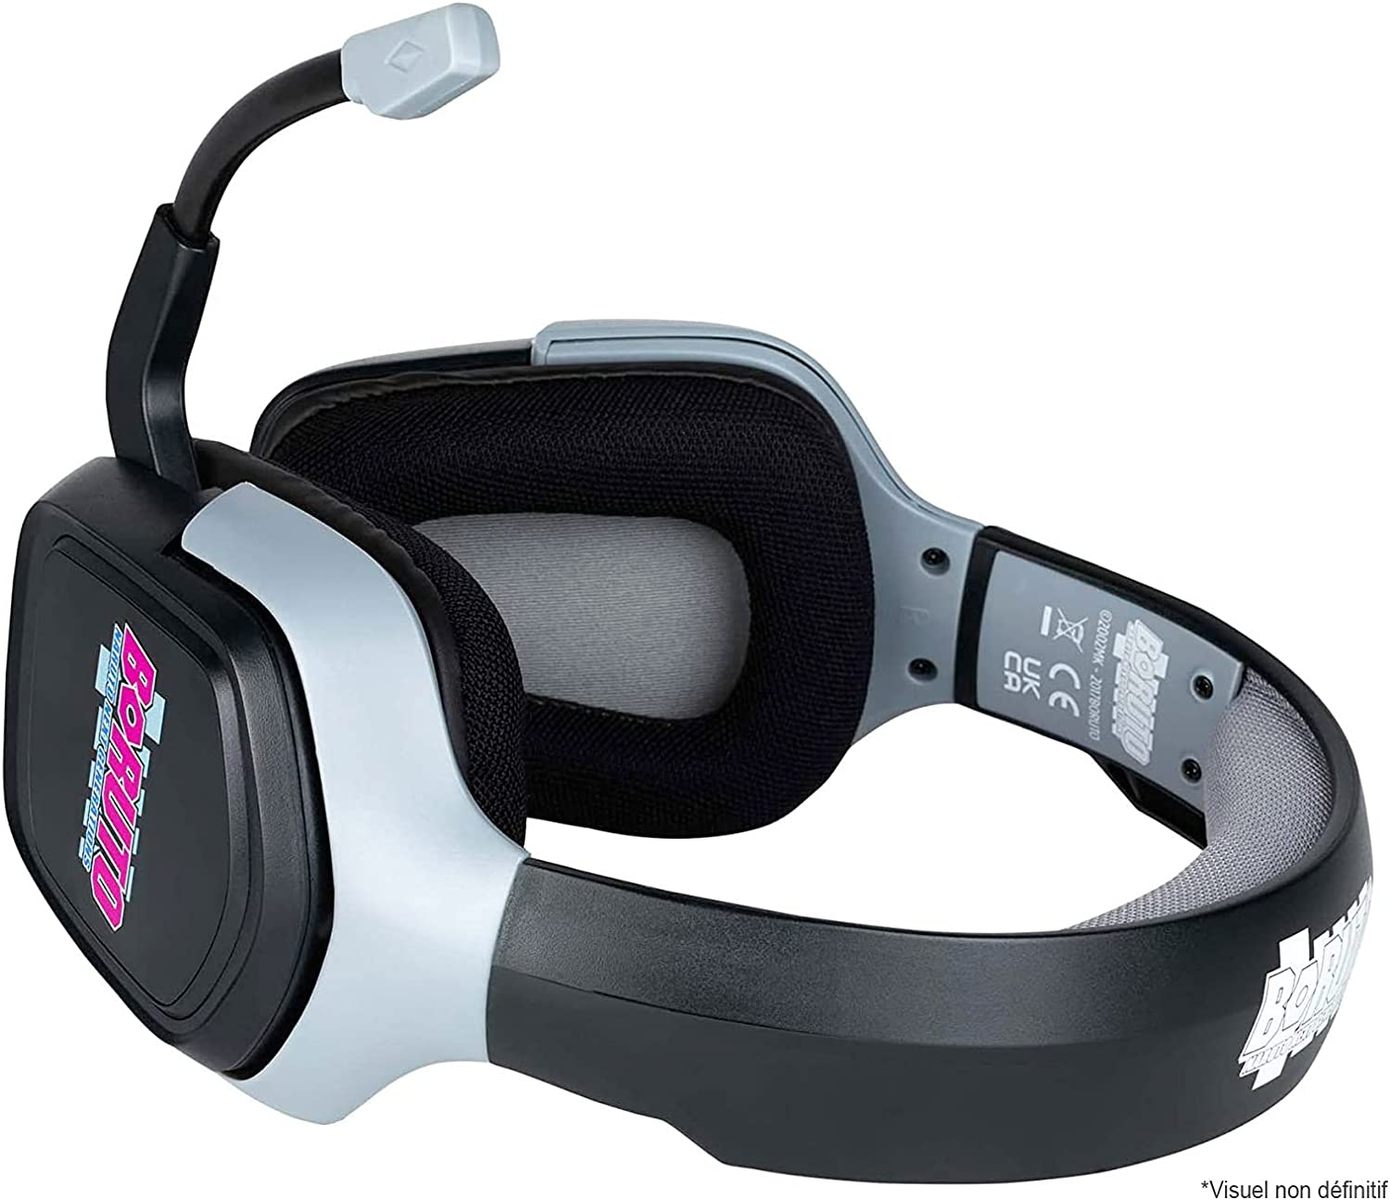 KONIX HEADSET, GAMING On-ear Gaming BORUTO Headset Mehrfarbig